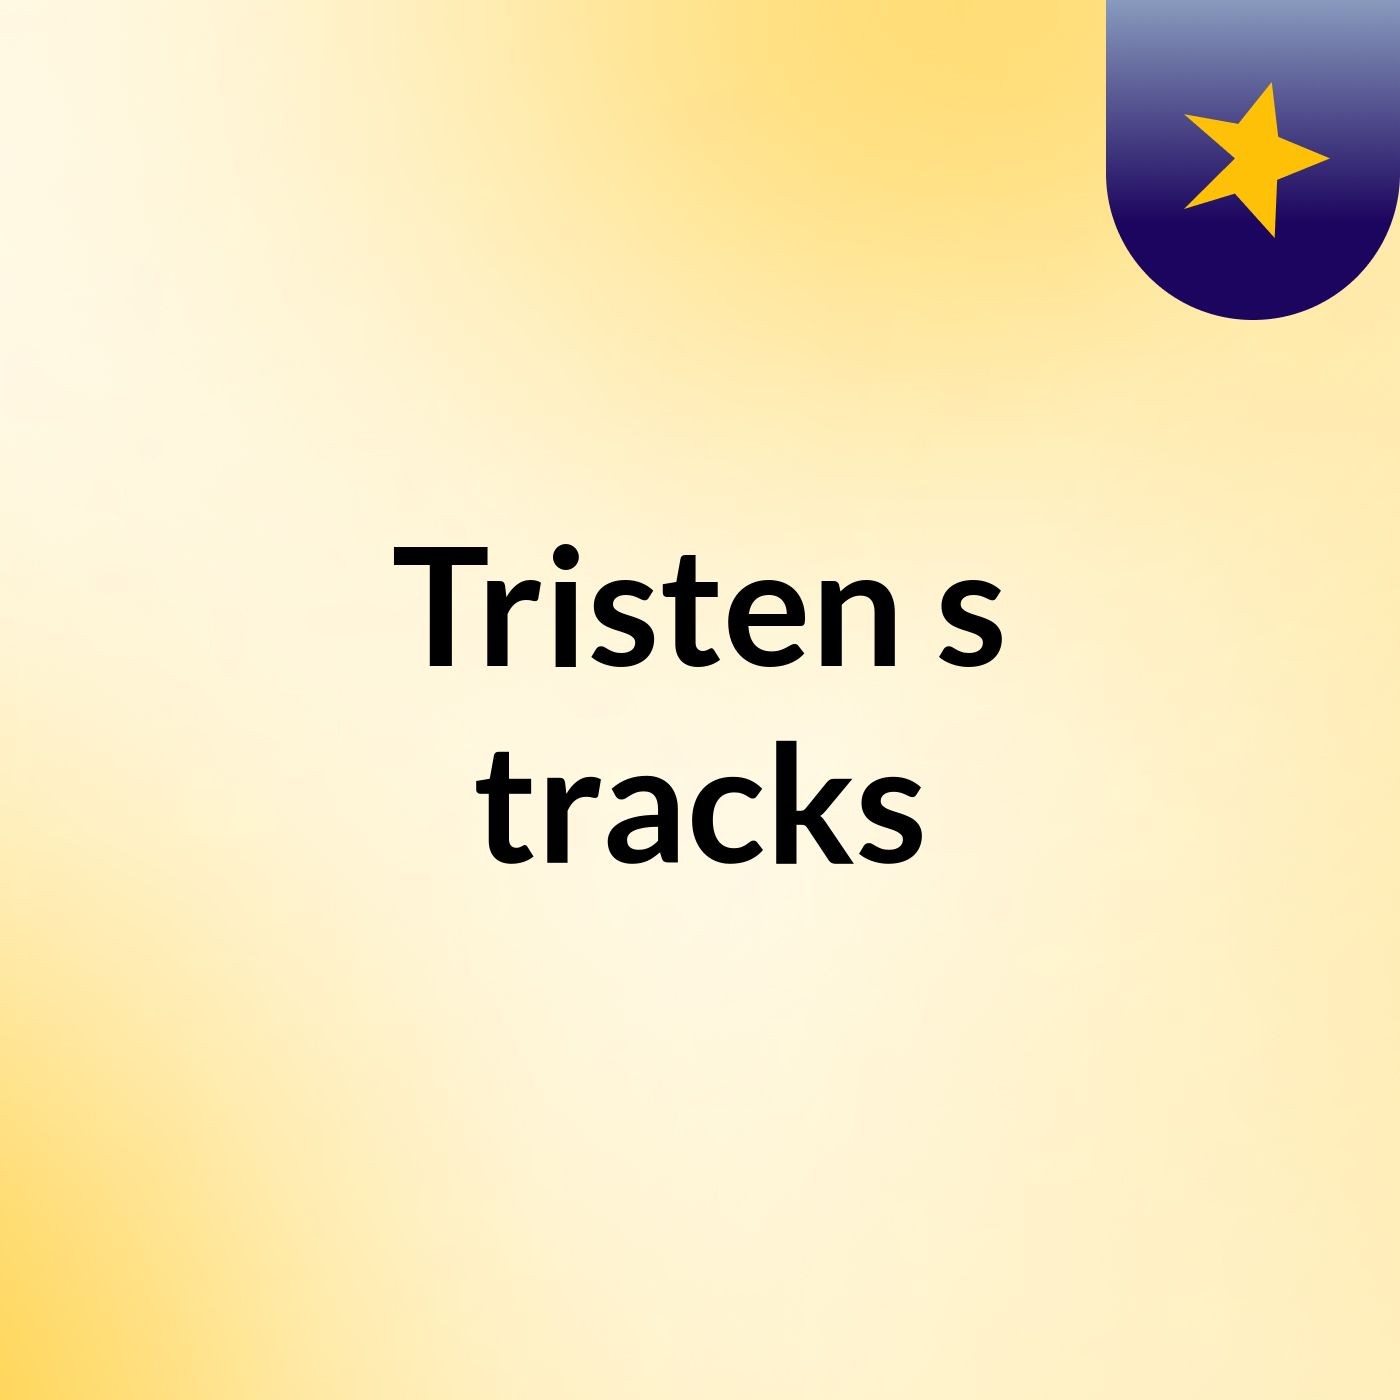 Tristen's tracks